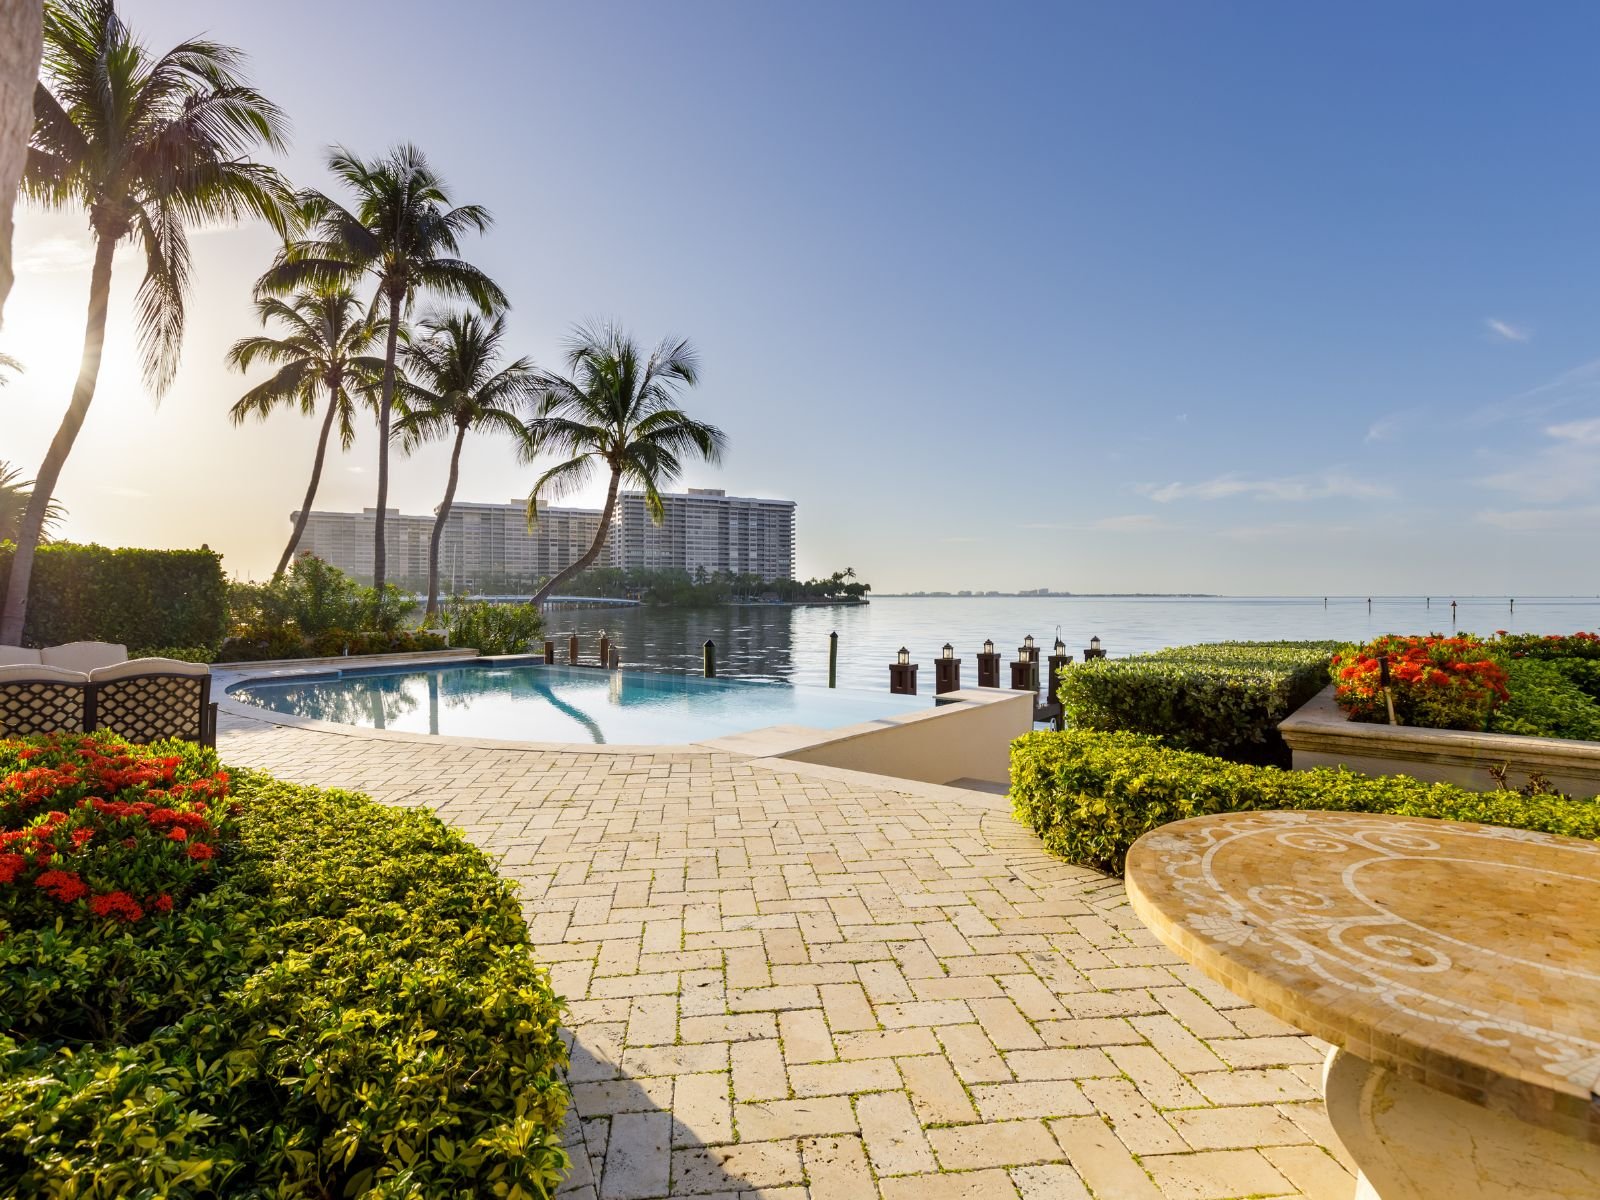 Master Brokers Forum Listing: Step Inside This $25 Million Coconut Grove Waterfront Mediterranean Estate4.jpg